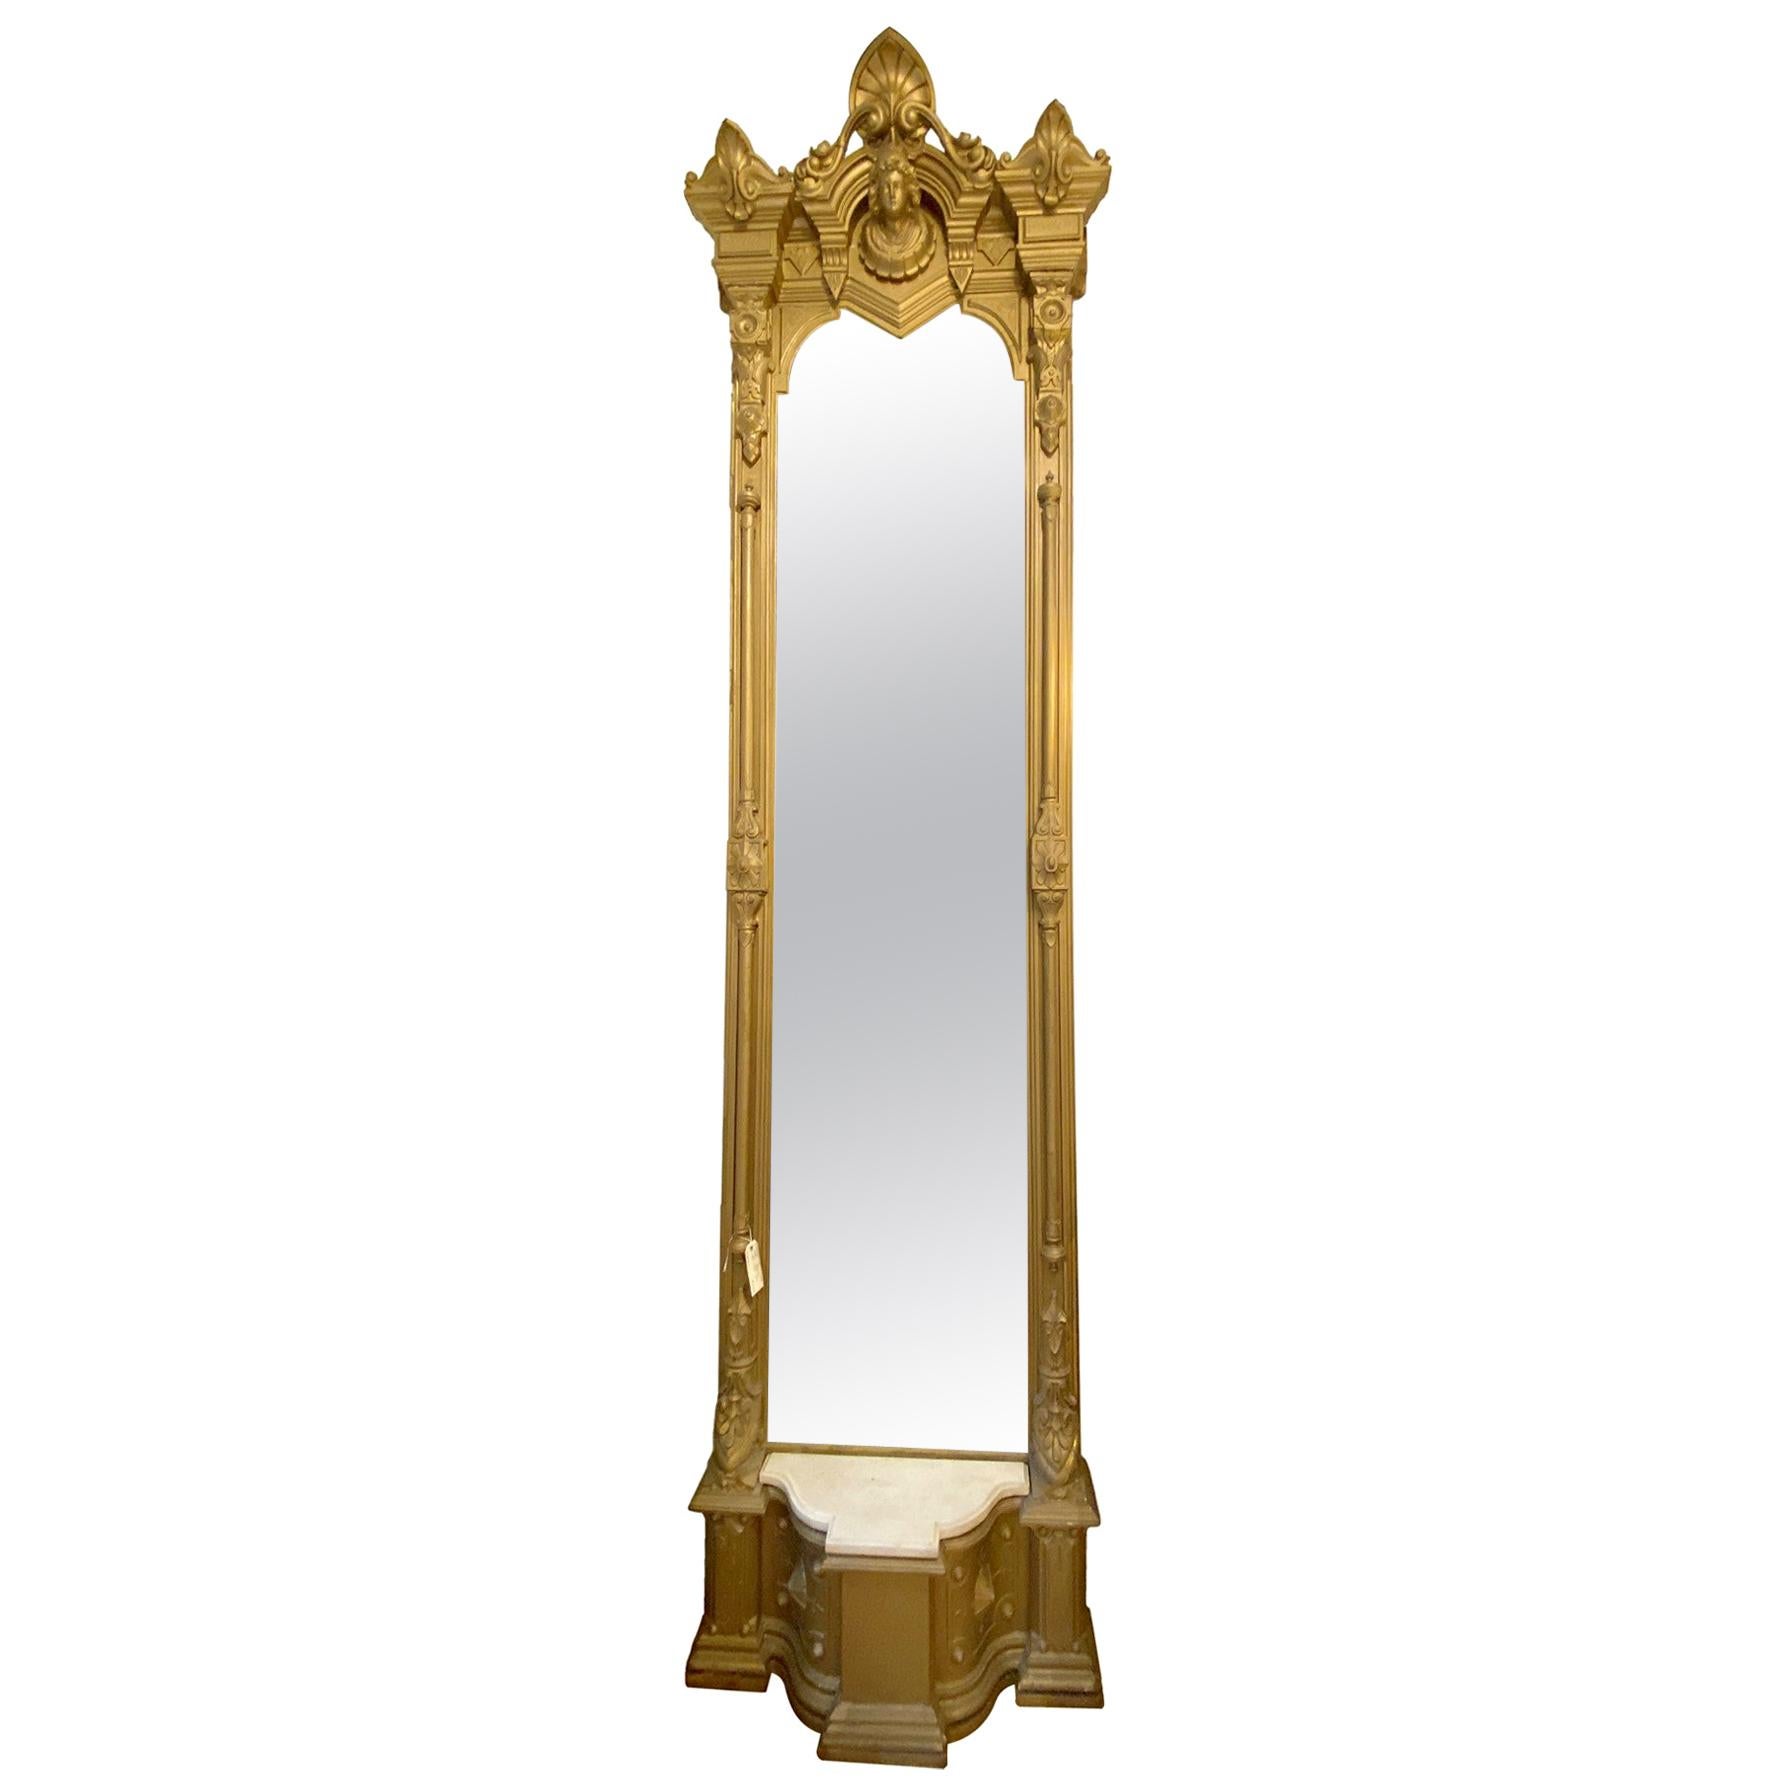 1870s Victorian Gold Pier Mirror Brooklyn Brownstone Marble Shelf For Sale